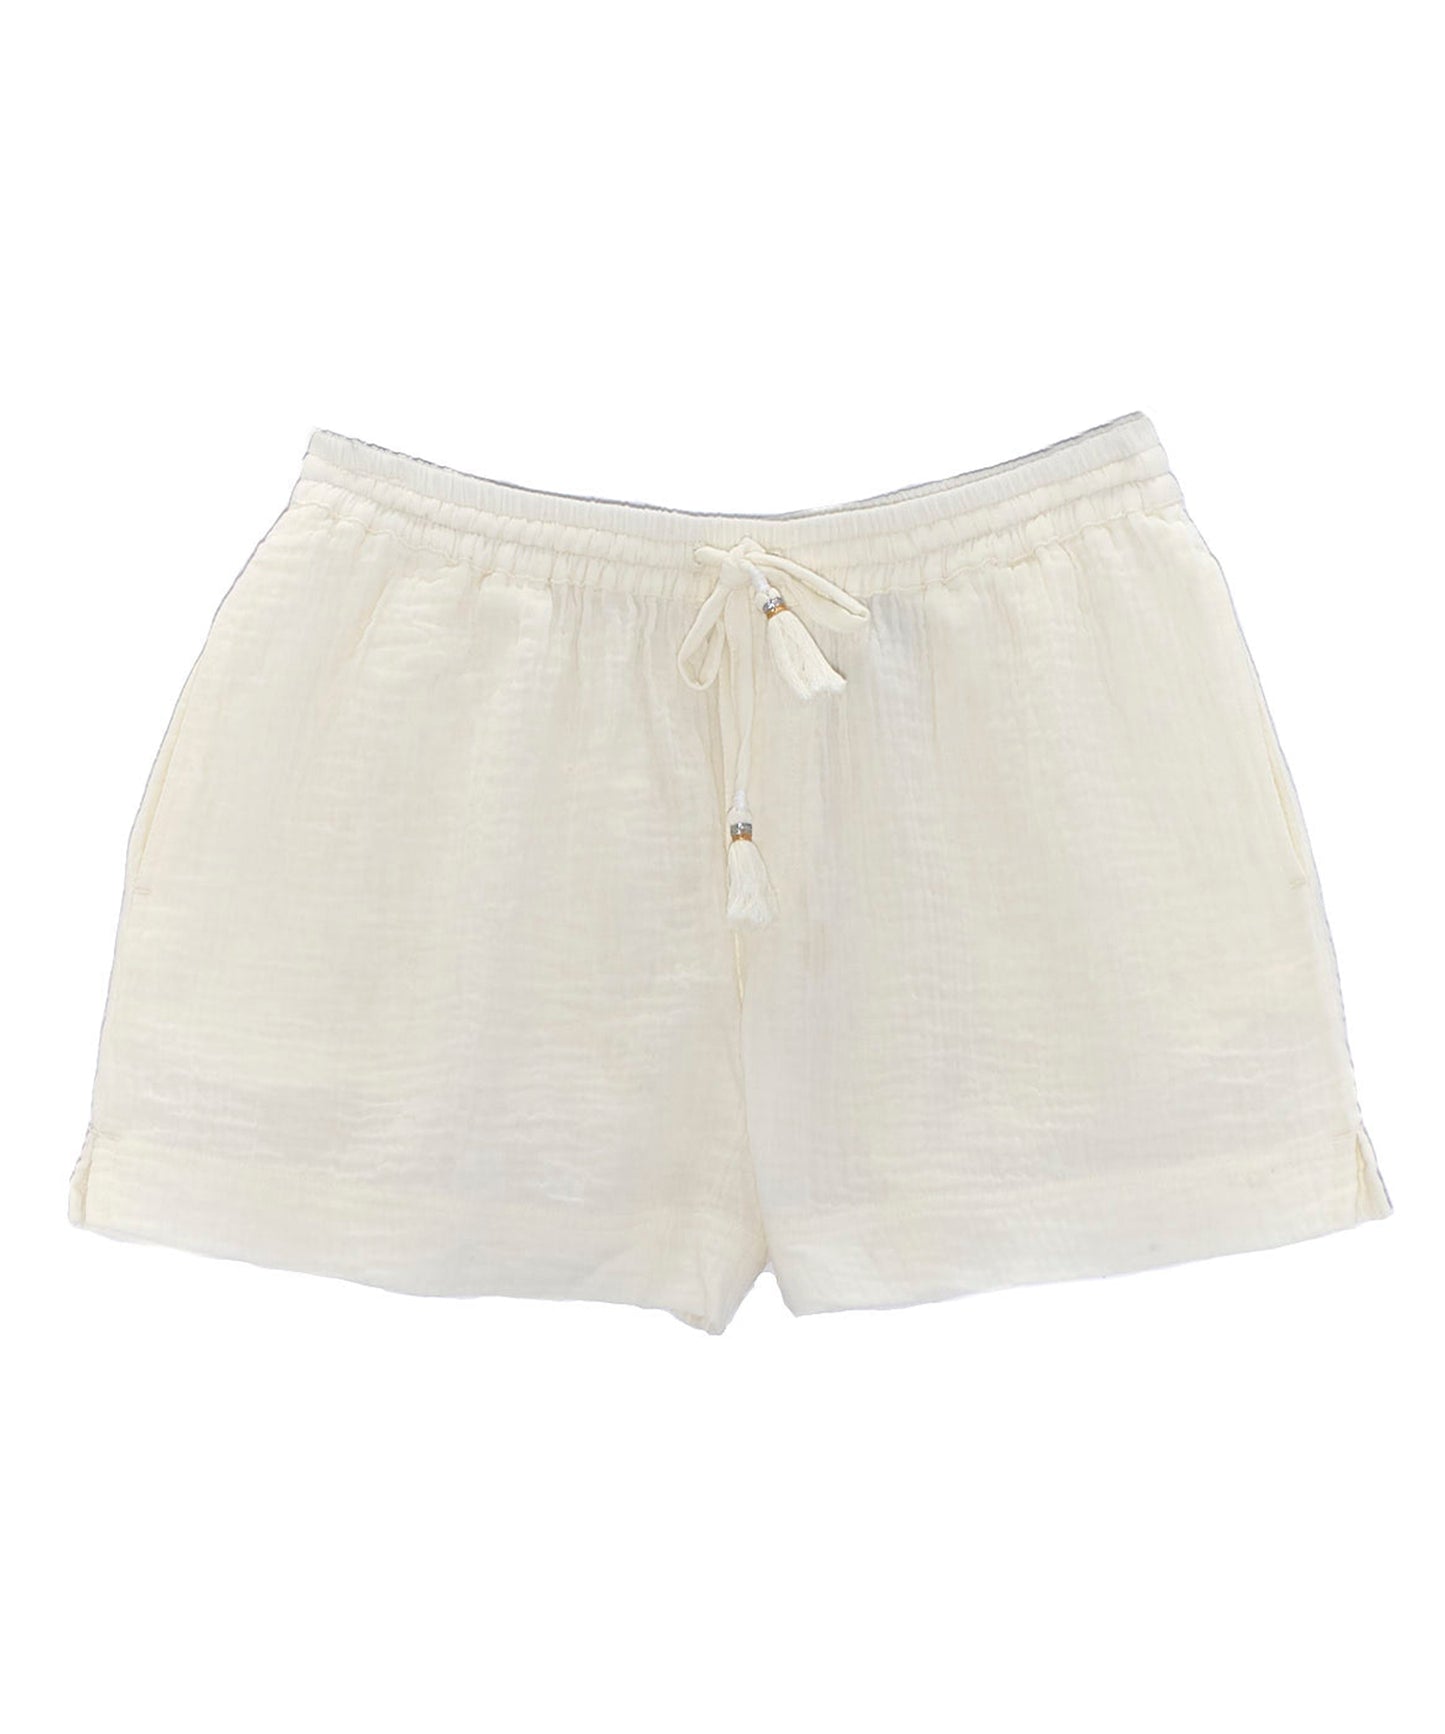 Double Gauze Beach Shorts in color Cream